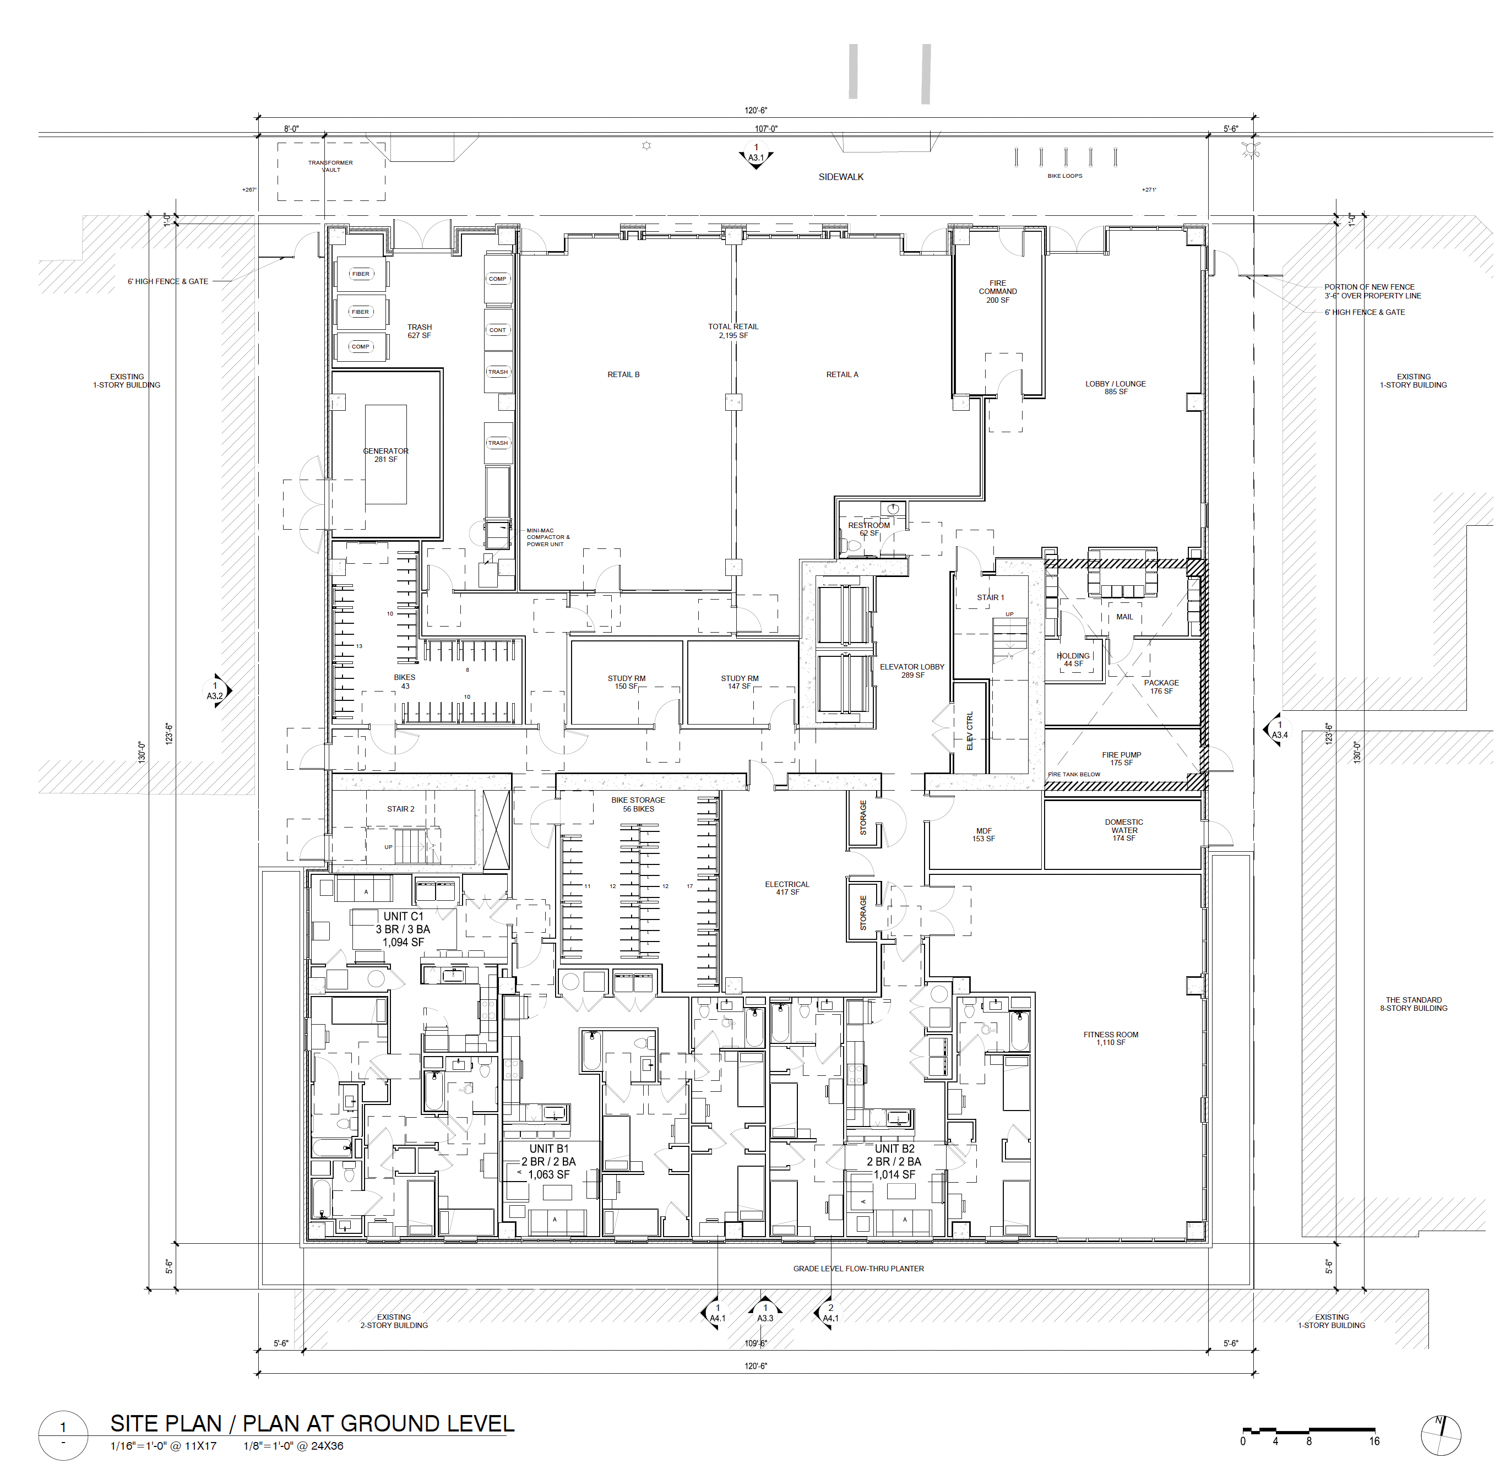 2530 Bancroft Way ground-level floor plan, illustration by Trachtenberg Architects